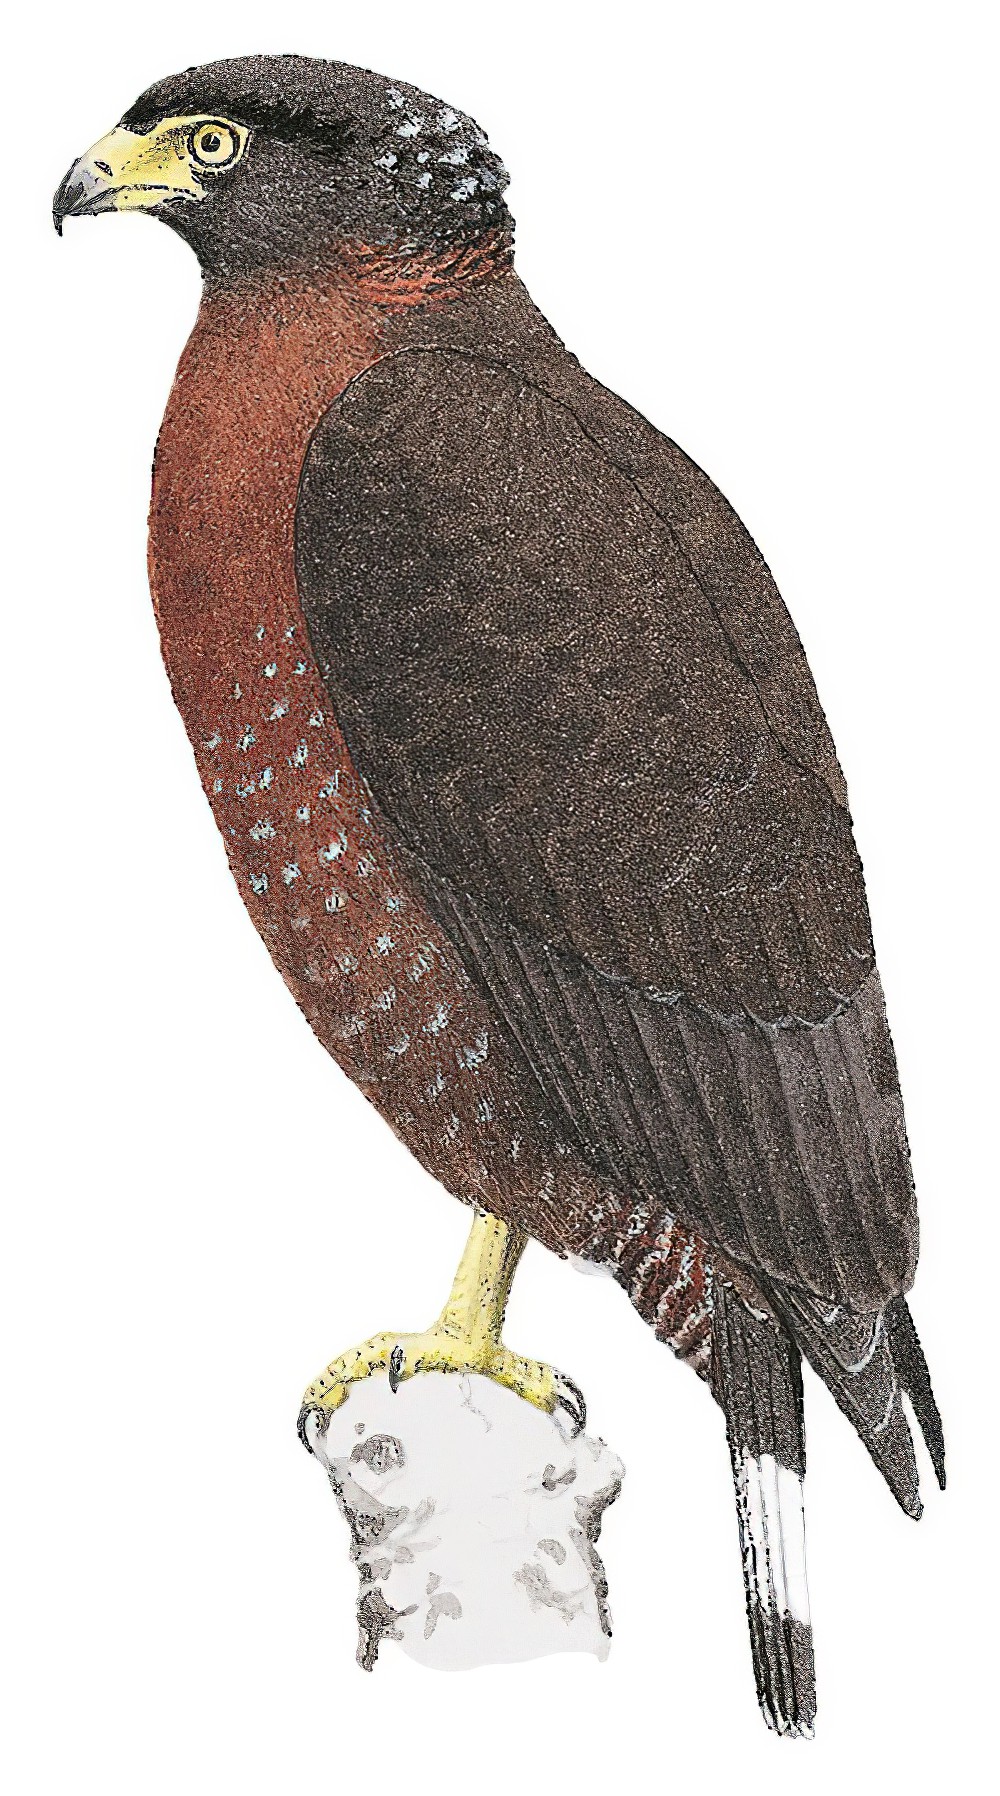 Mountain Serpent-Eagle / Spilornis kinabaluensis